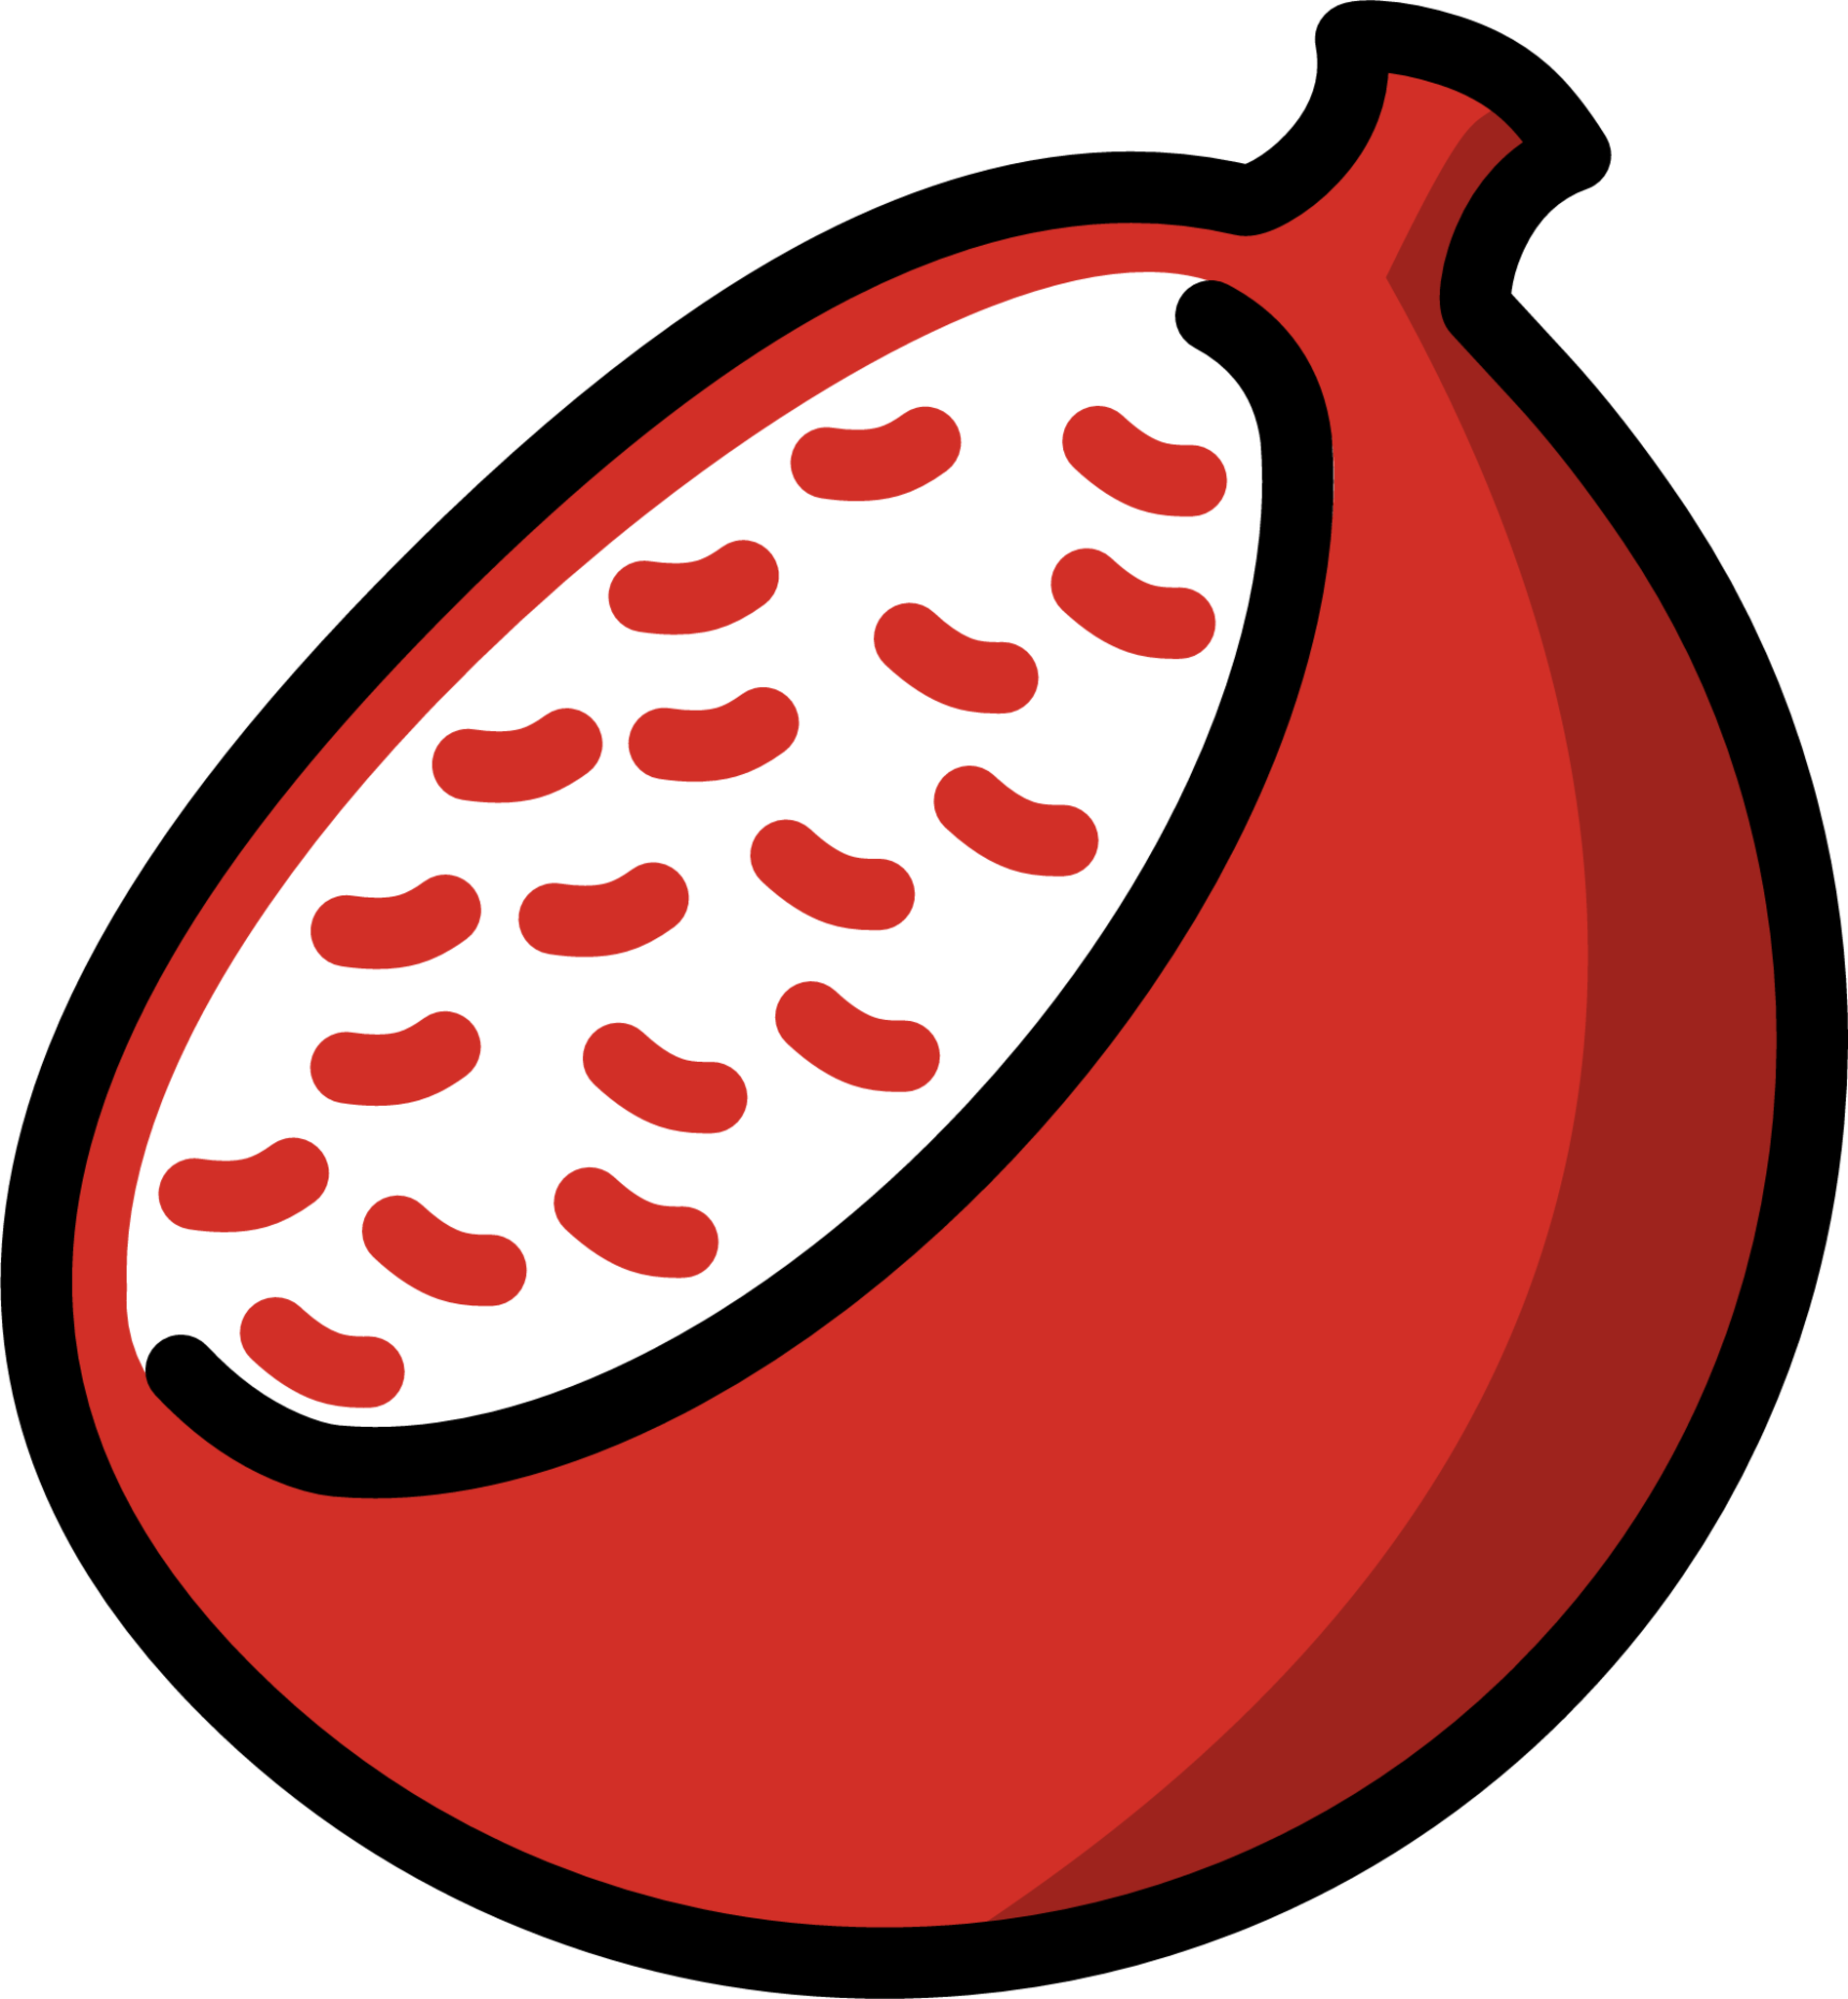 https://static-00.iconduck.com/assets.00/pomegranate-emoji-1893x2048-fkc5eejy.png